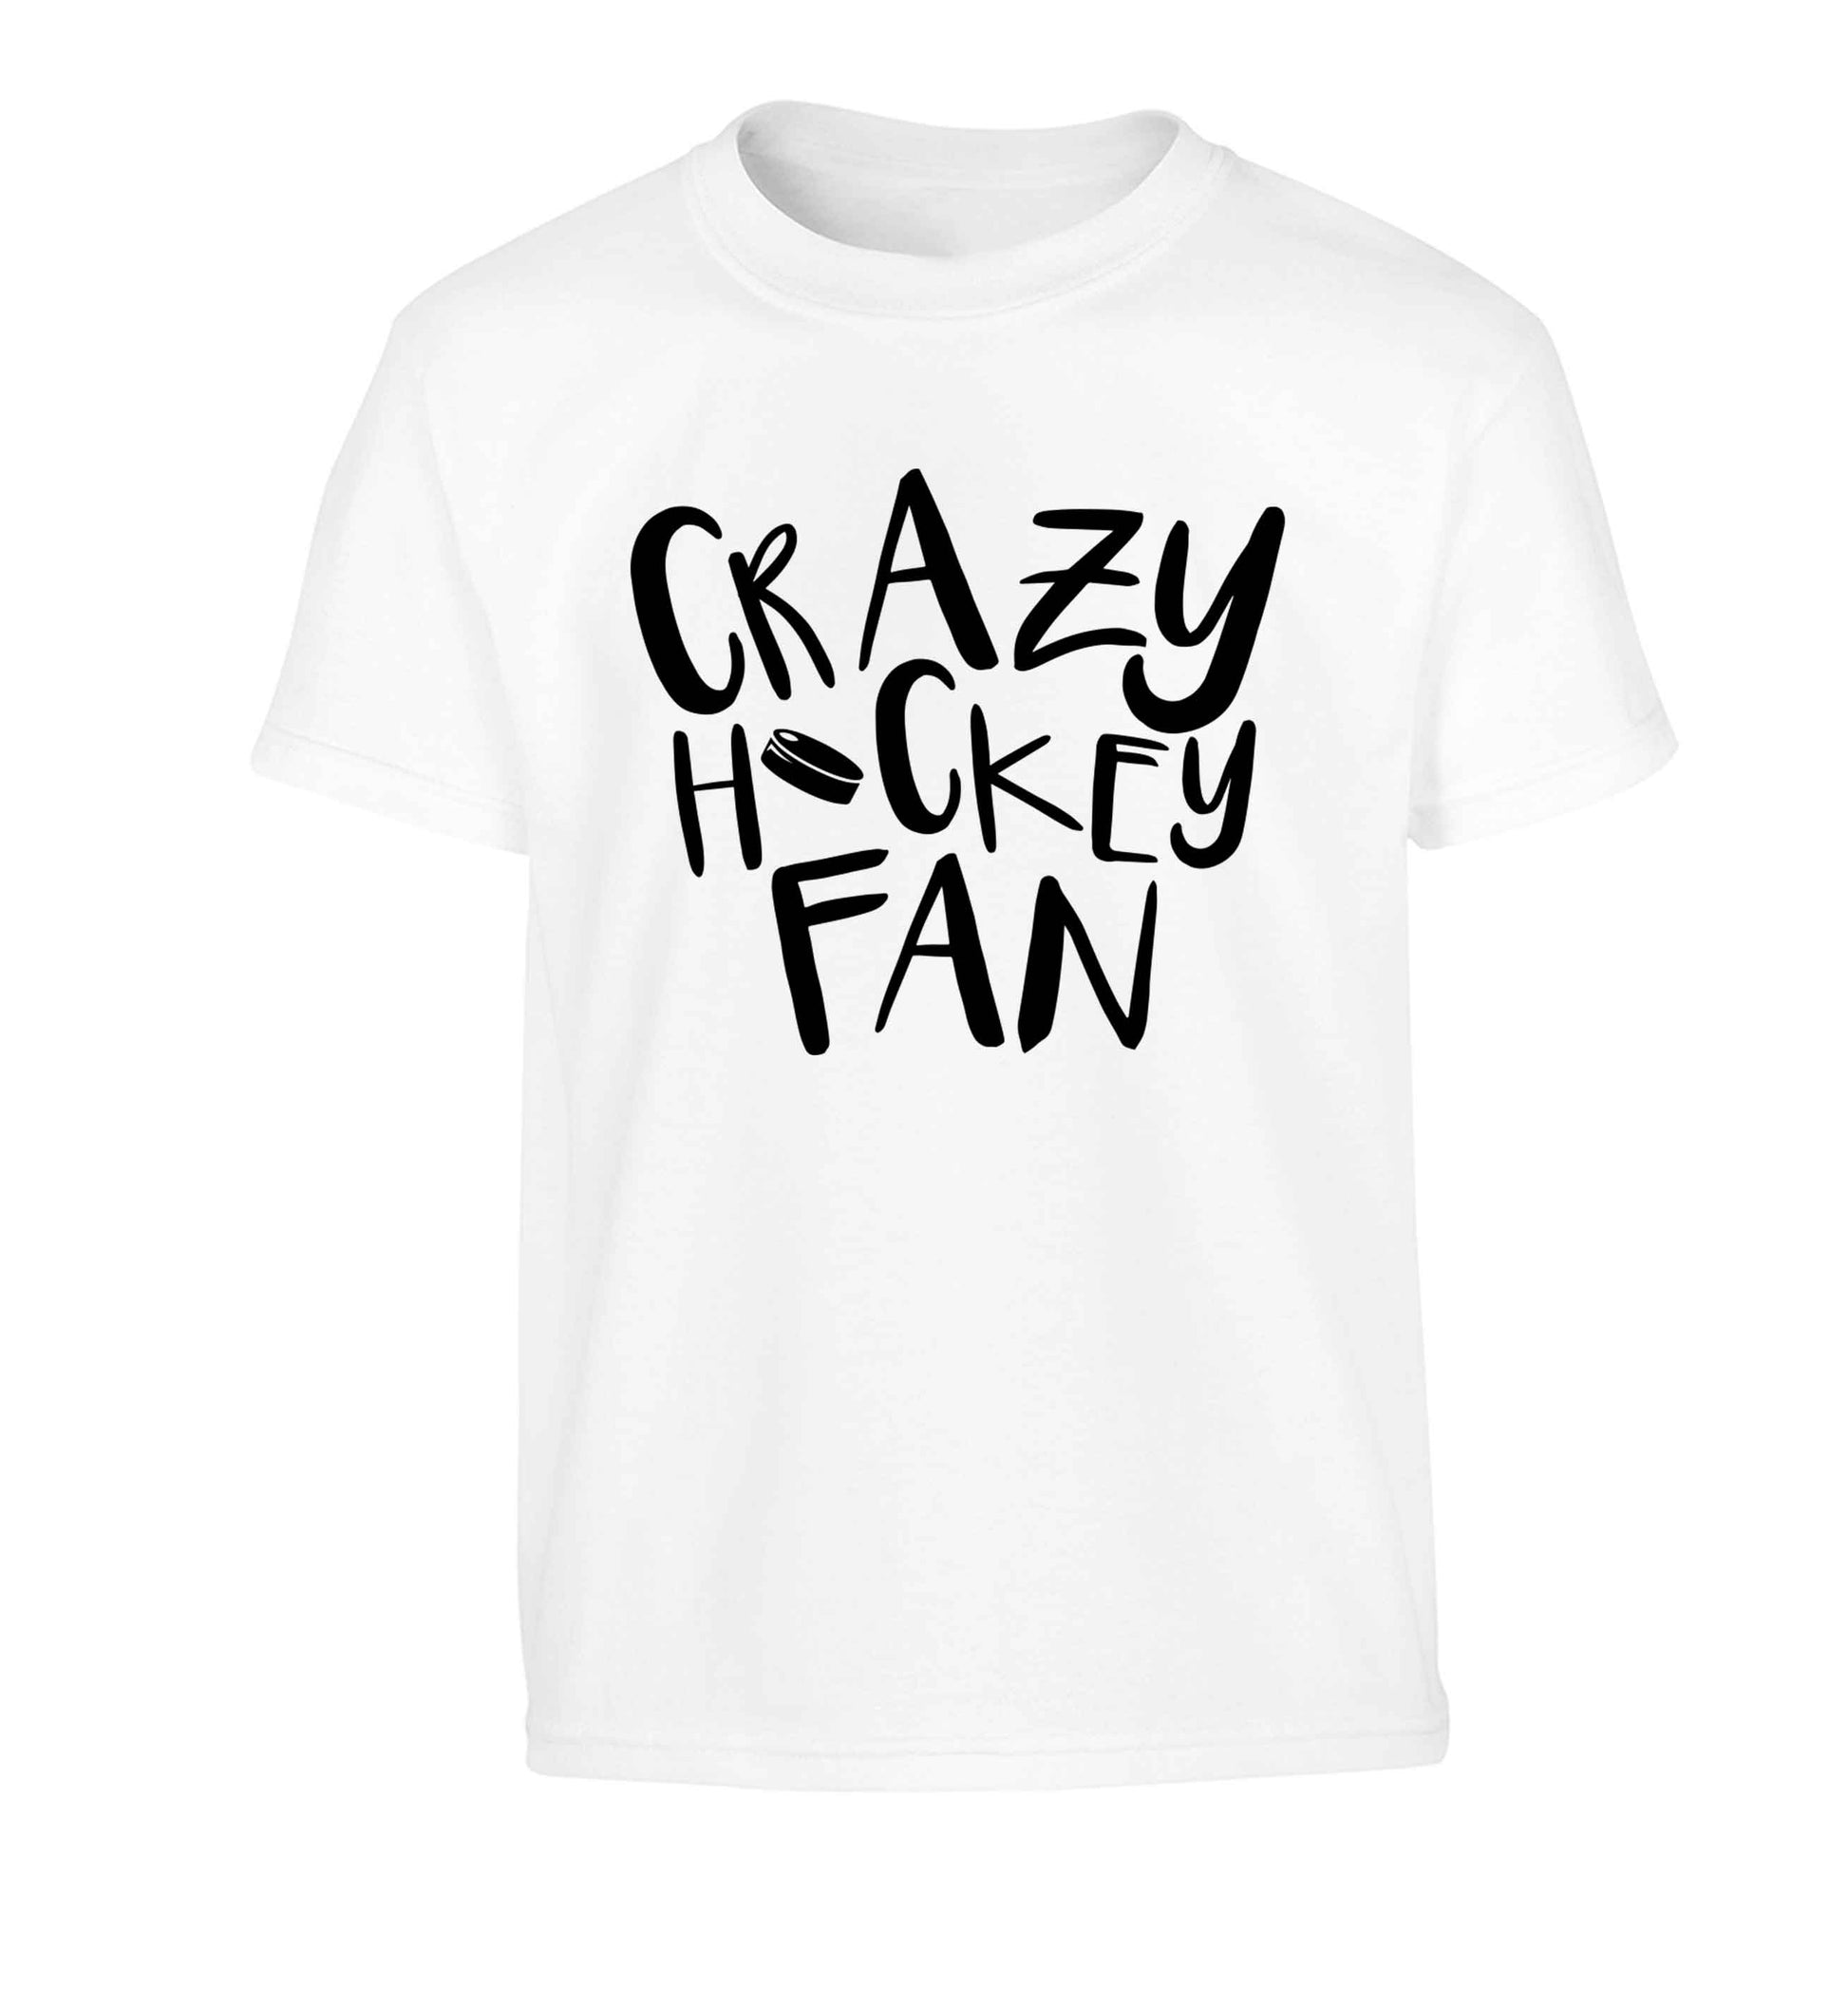 Crazy hockey fan Children's white Tshirt 12-13 Years